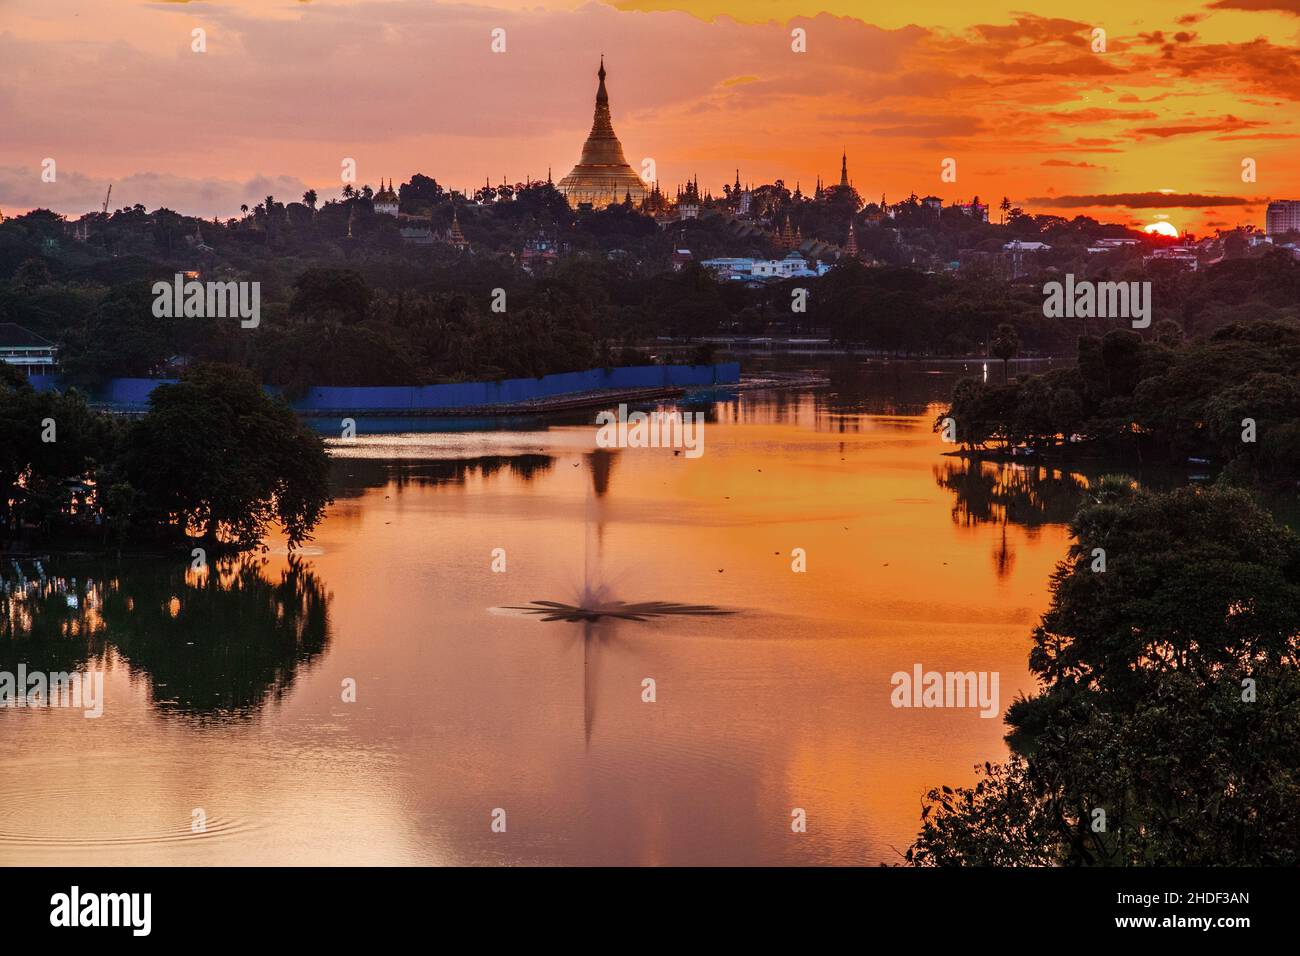 The Shwedagon Pagoda in Yangon Myanmar Southeast Asia during the Sunset Timeline Stock Photo